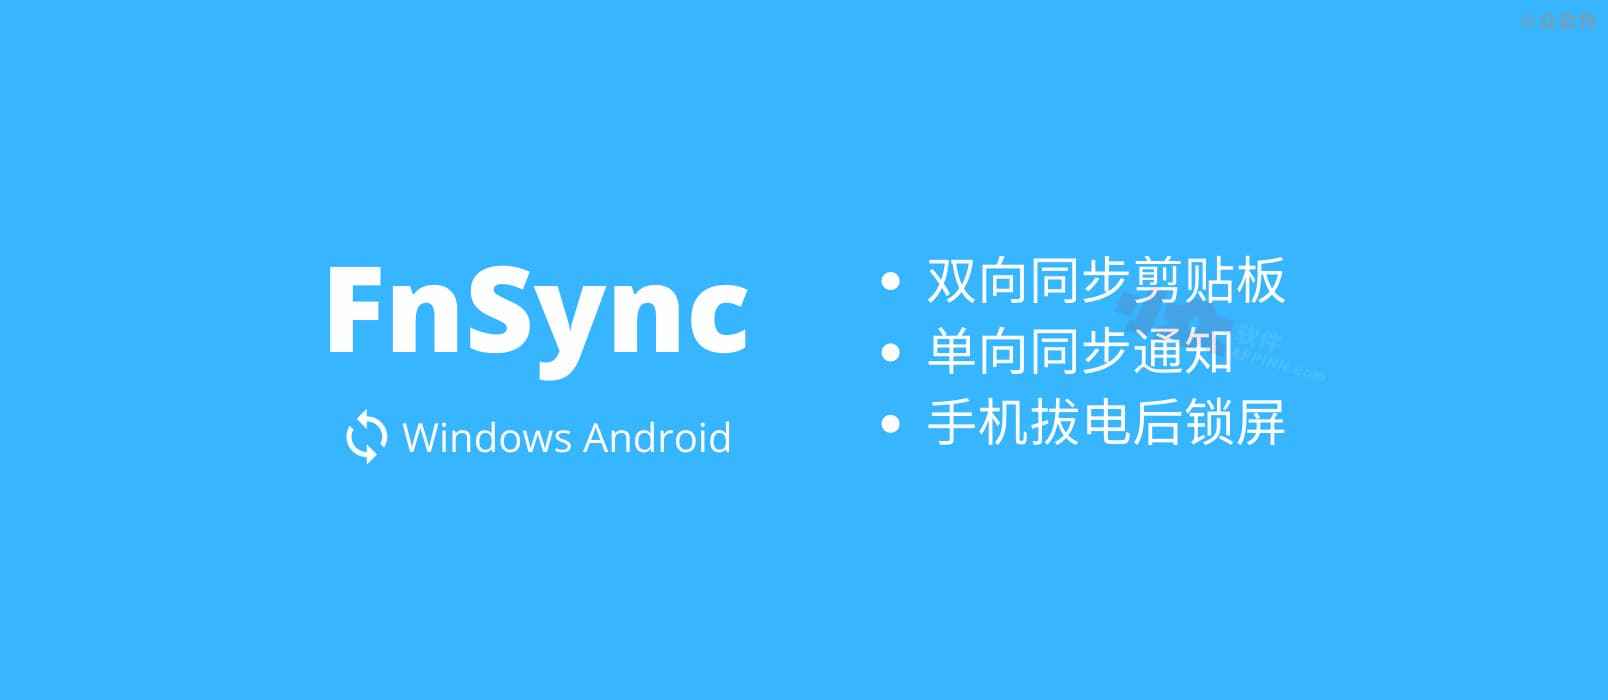 FnSync - 同步 Android 通知到 Windows，双向同步剪贴板，还能拔掉手机电源后锁定电脑 1